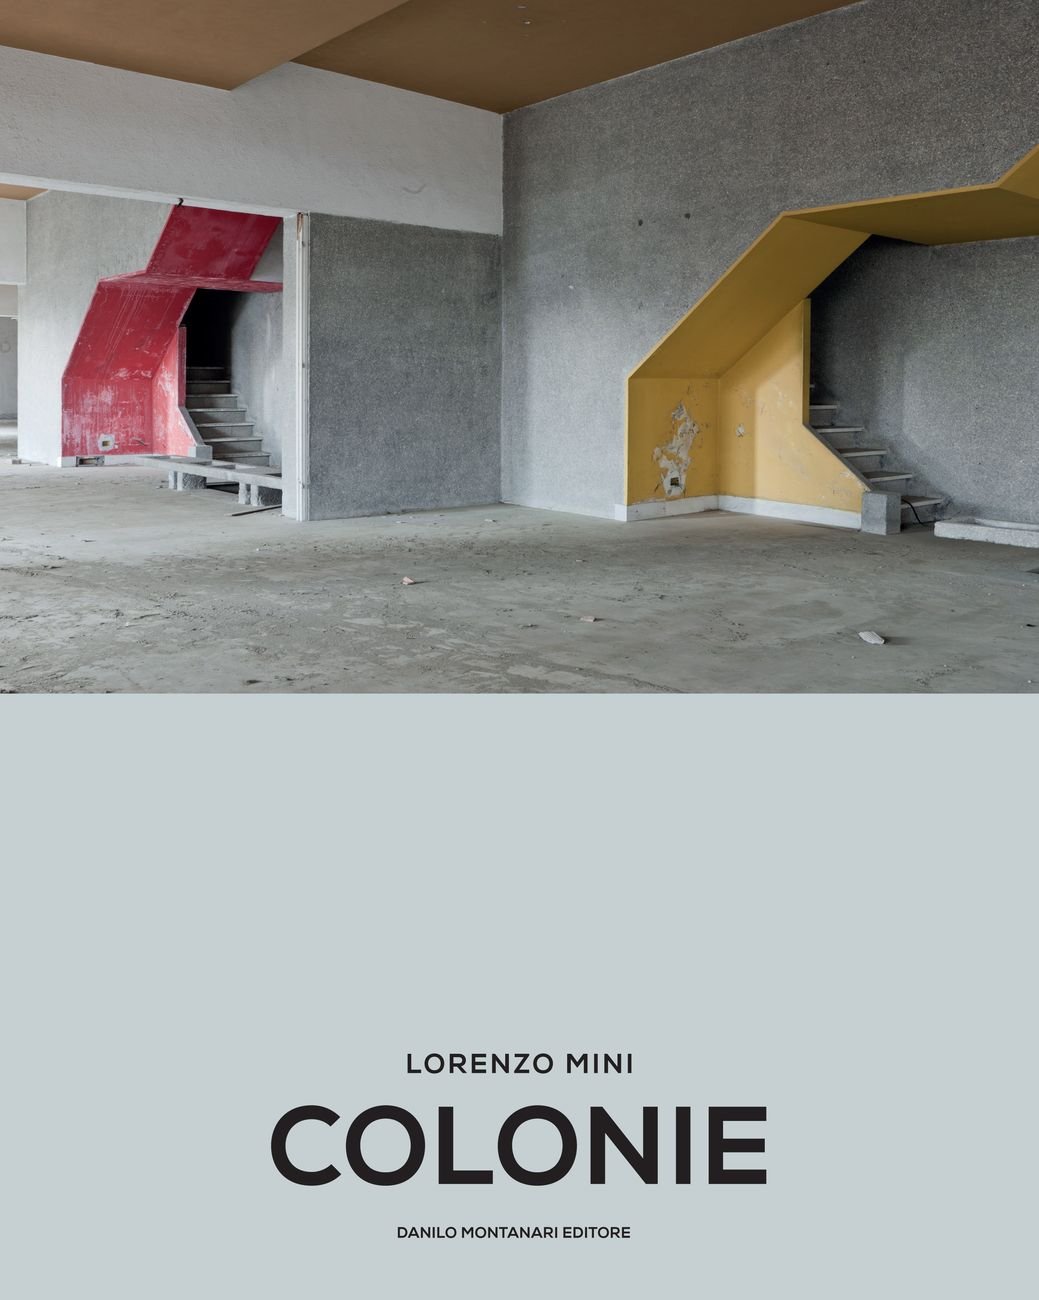 Lorenzo Mini – Colonie (Danilo Montanari, 2017)